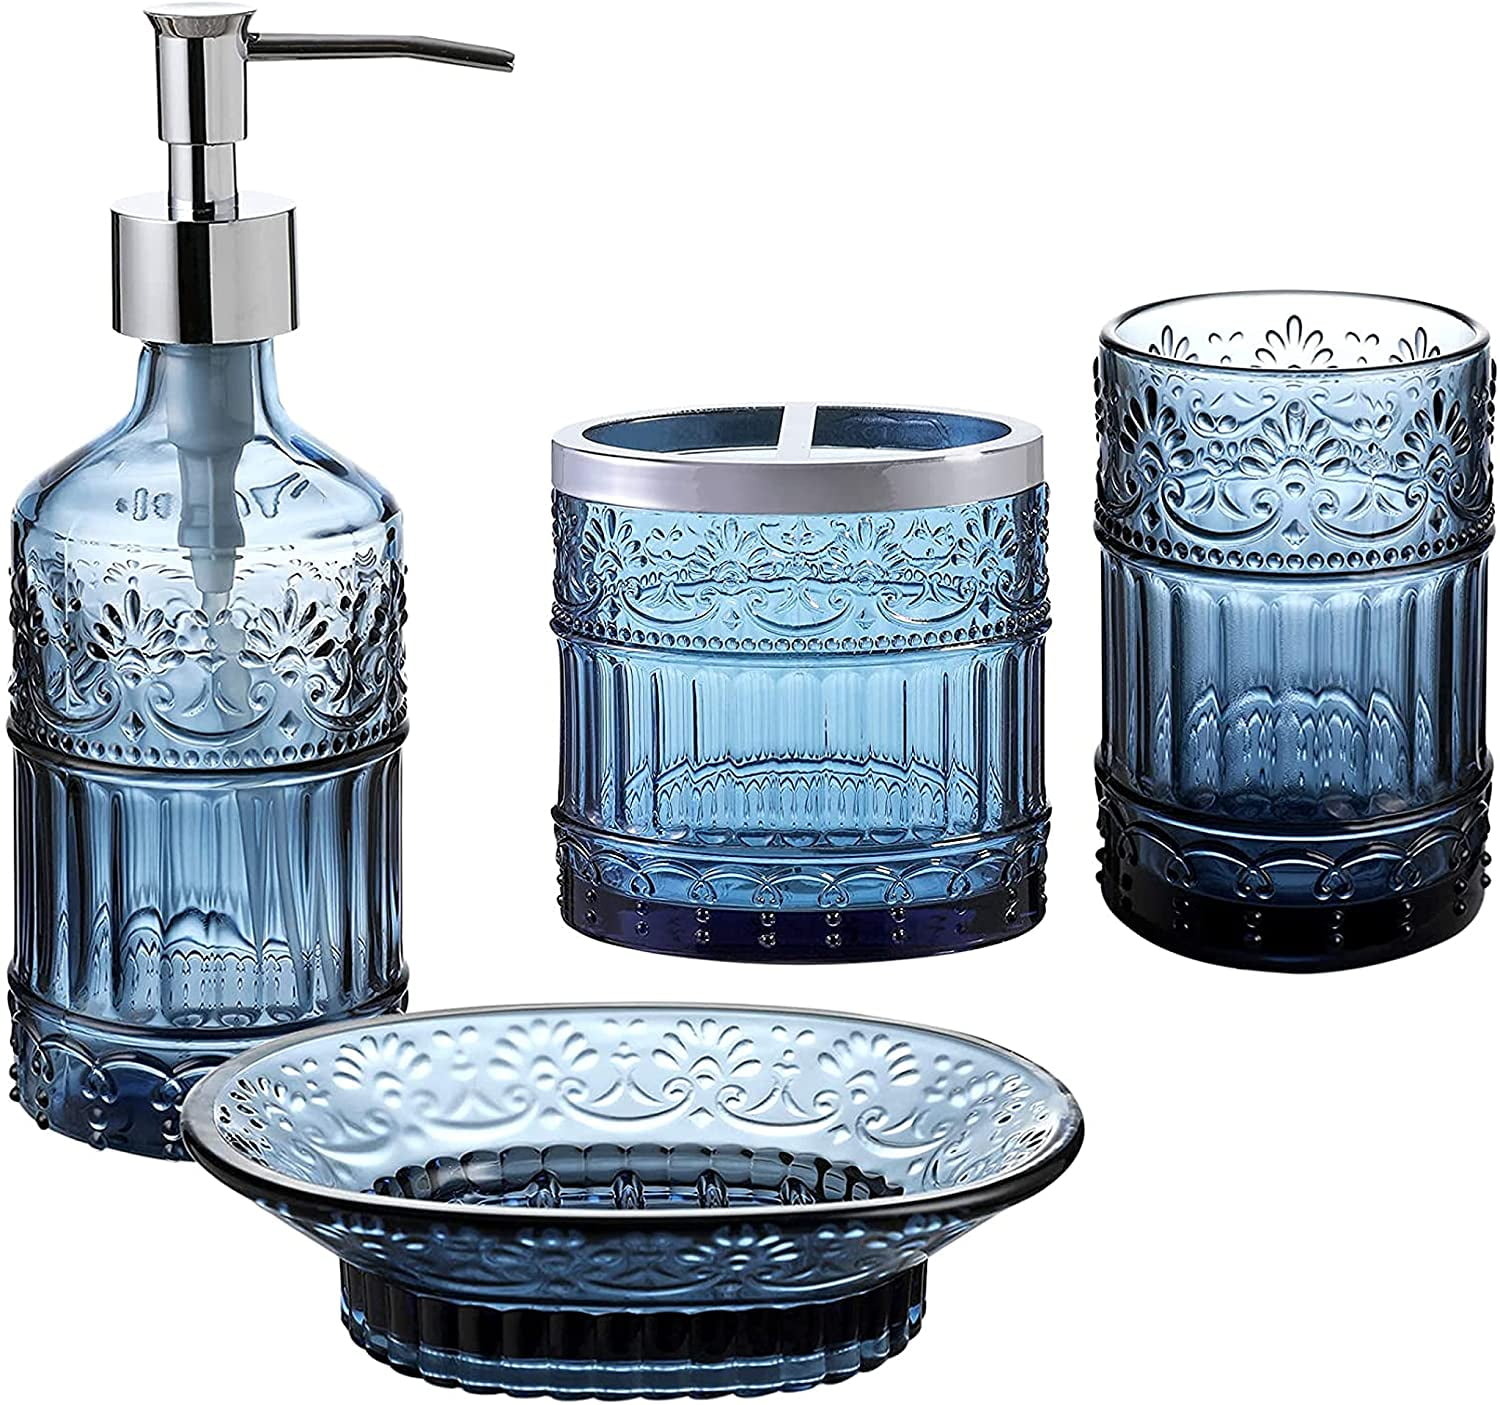 STYLE LAB ROYAL BLUE,NAVY IRIDESCENT GLASS MOSAIC SPHERE BATHROOM SOAP DISPENSER 